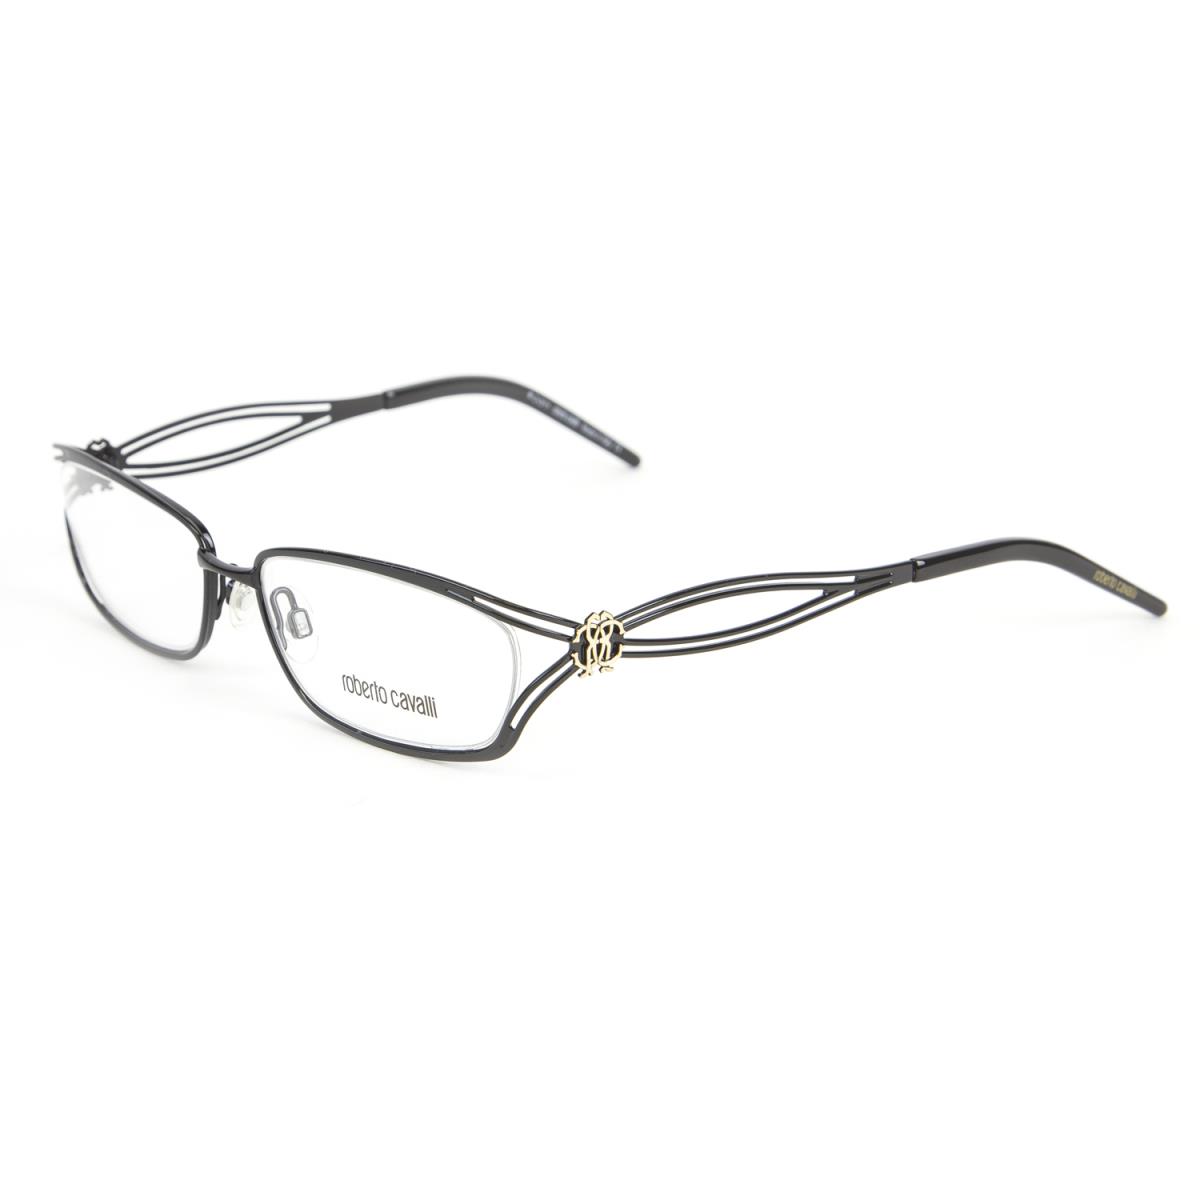 Roberto Cavalli Botton D`oro Eyeglass Frames 55mm Black